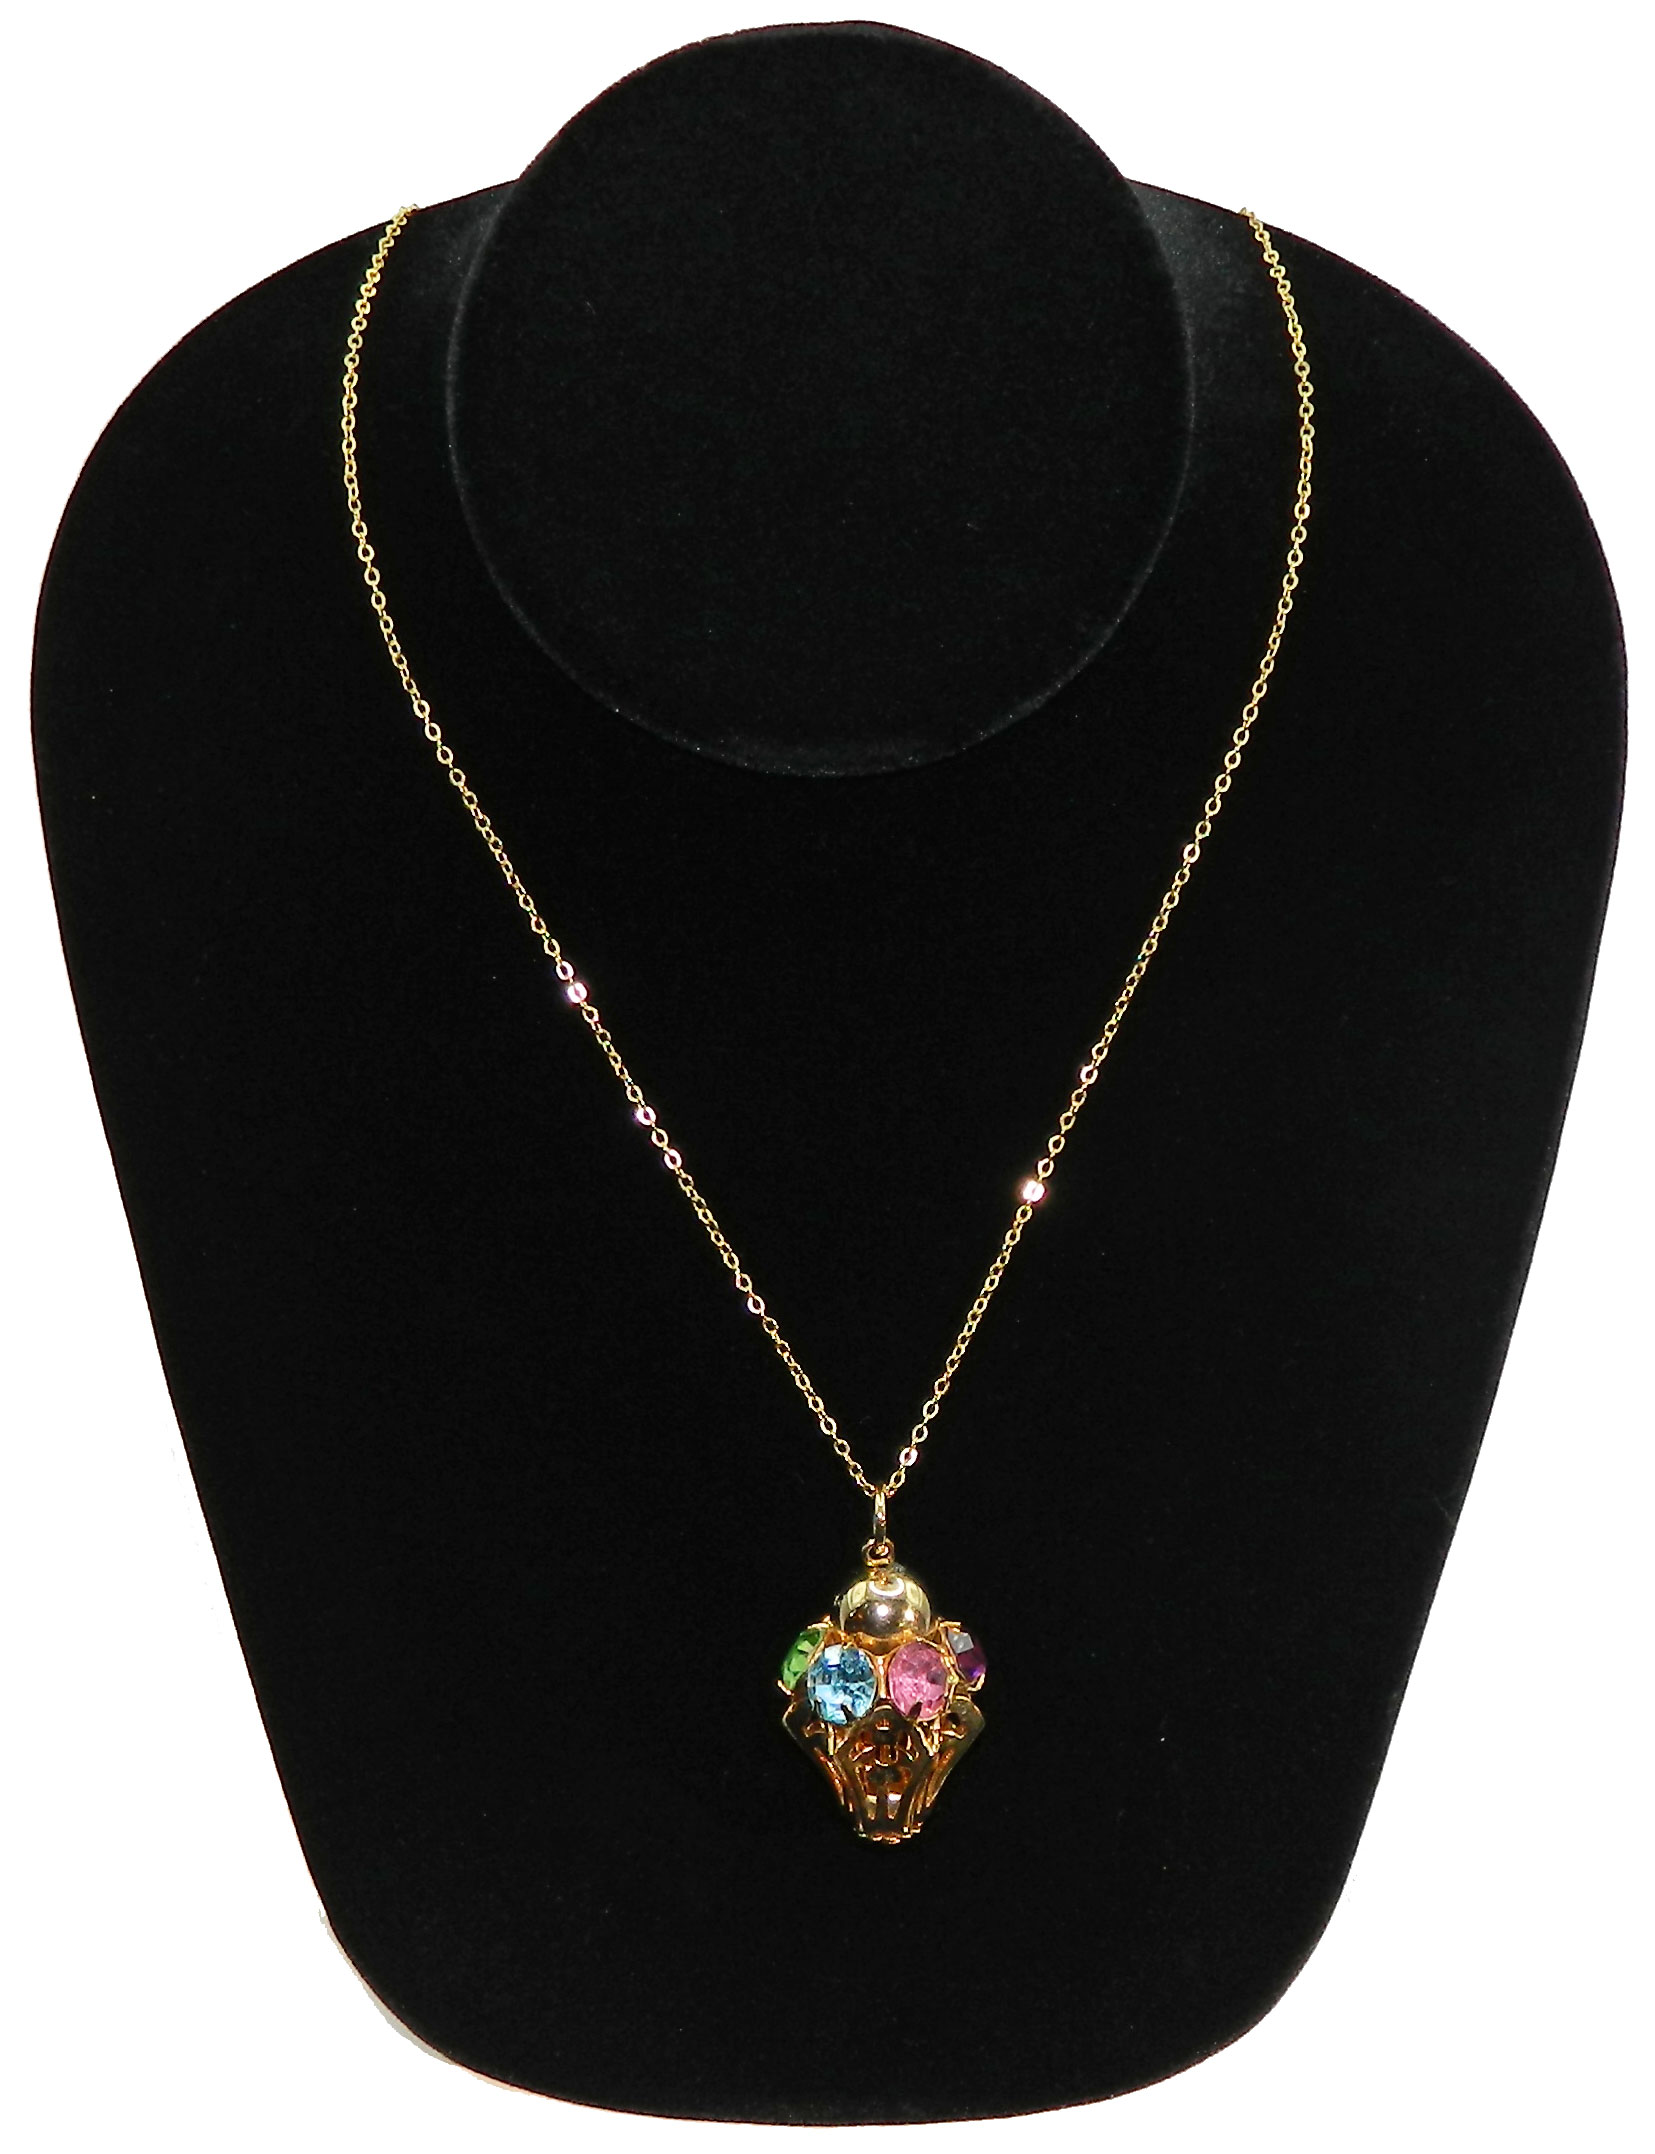 Rhinestone pendant necklace